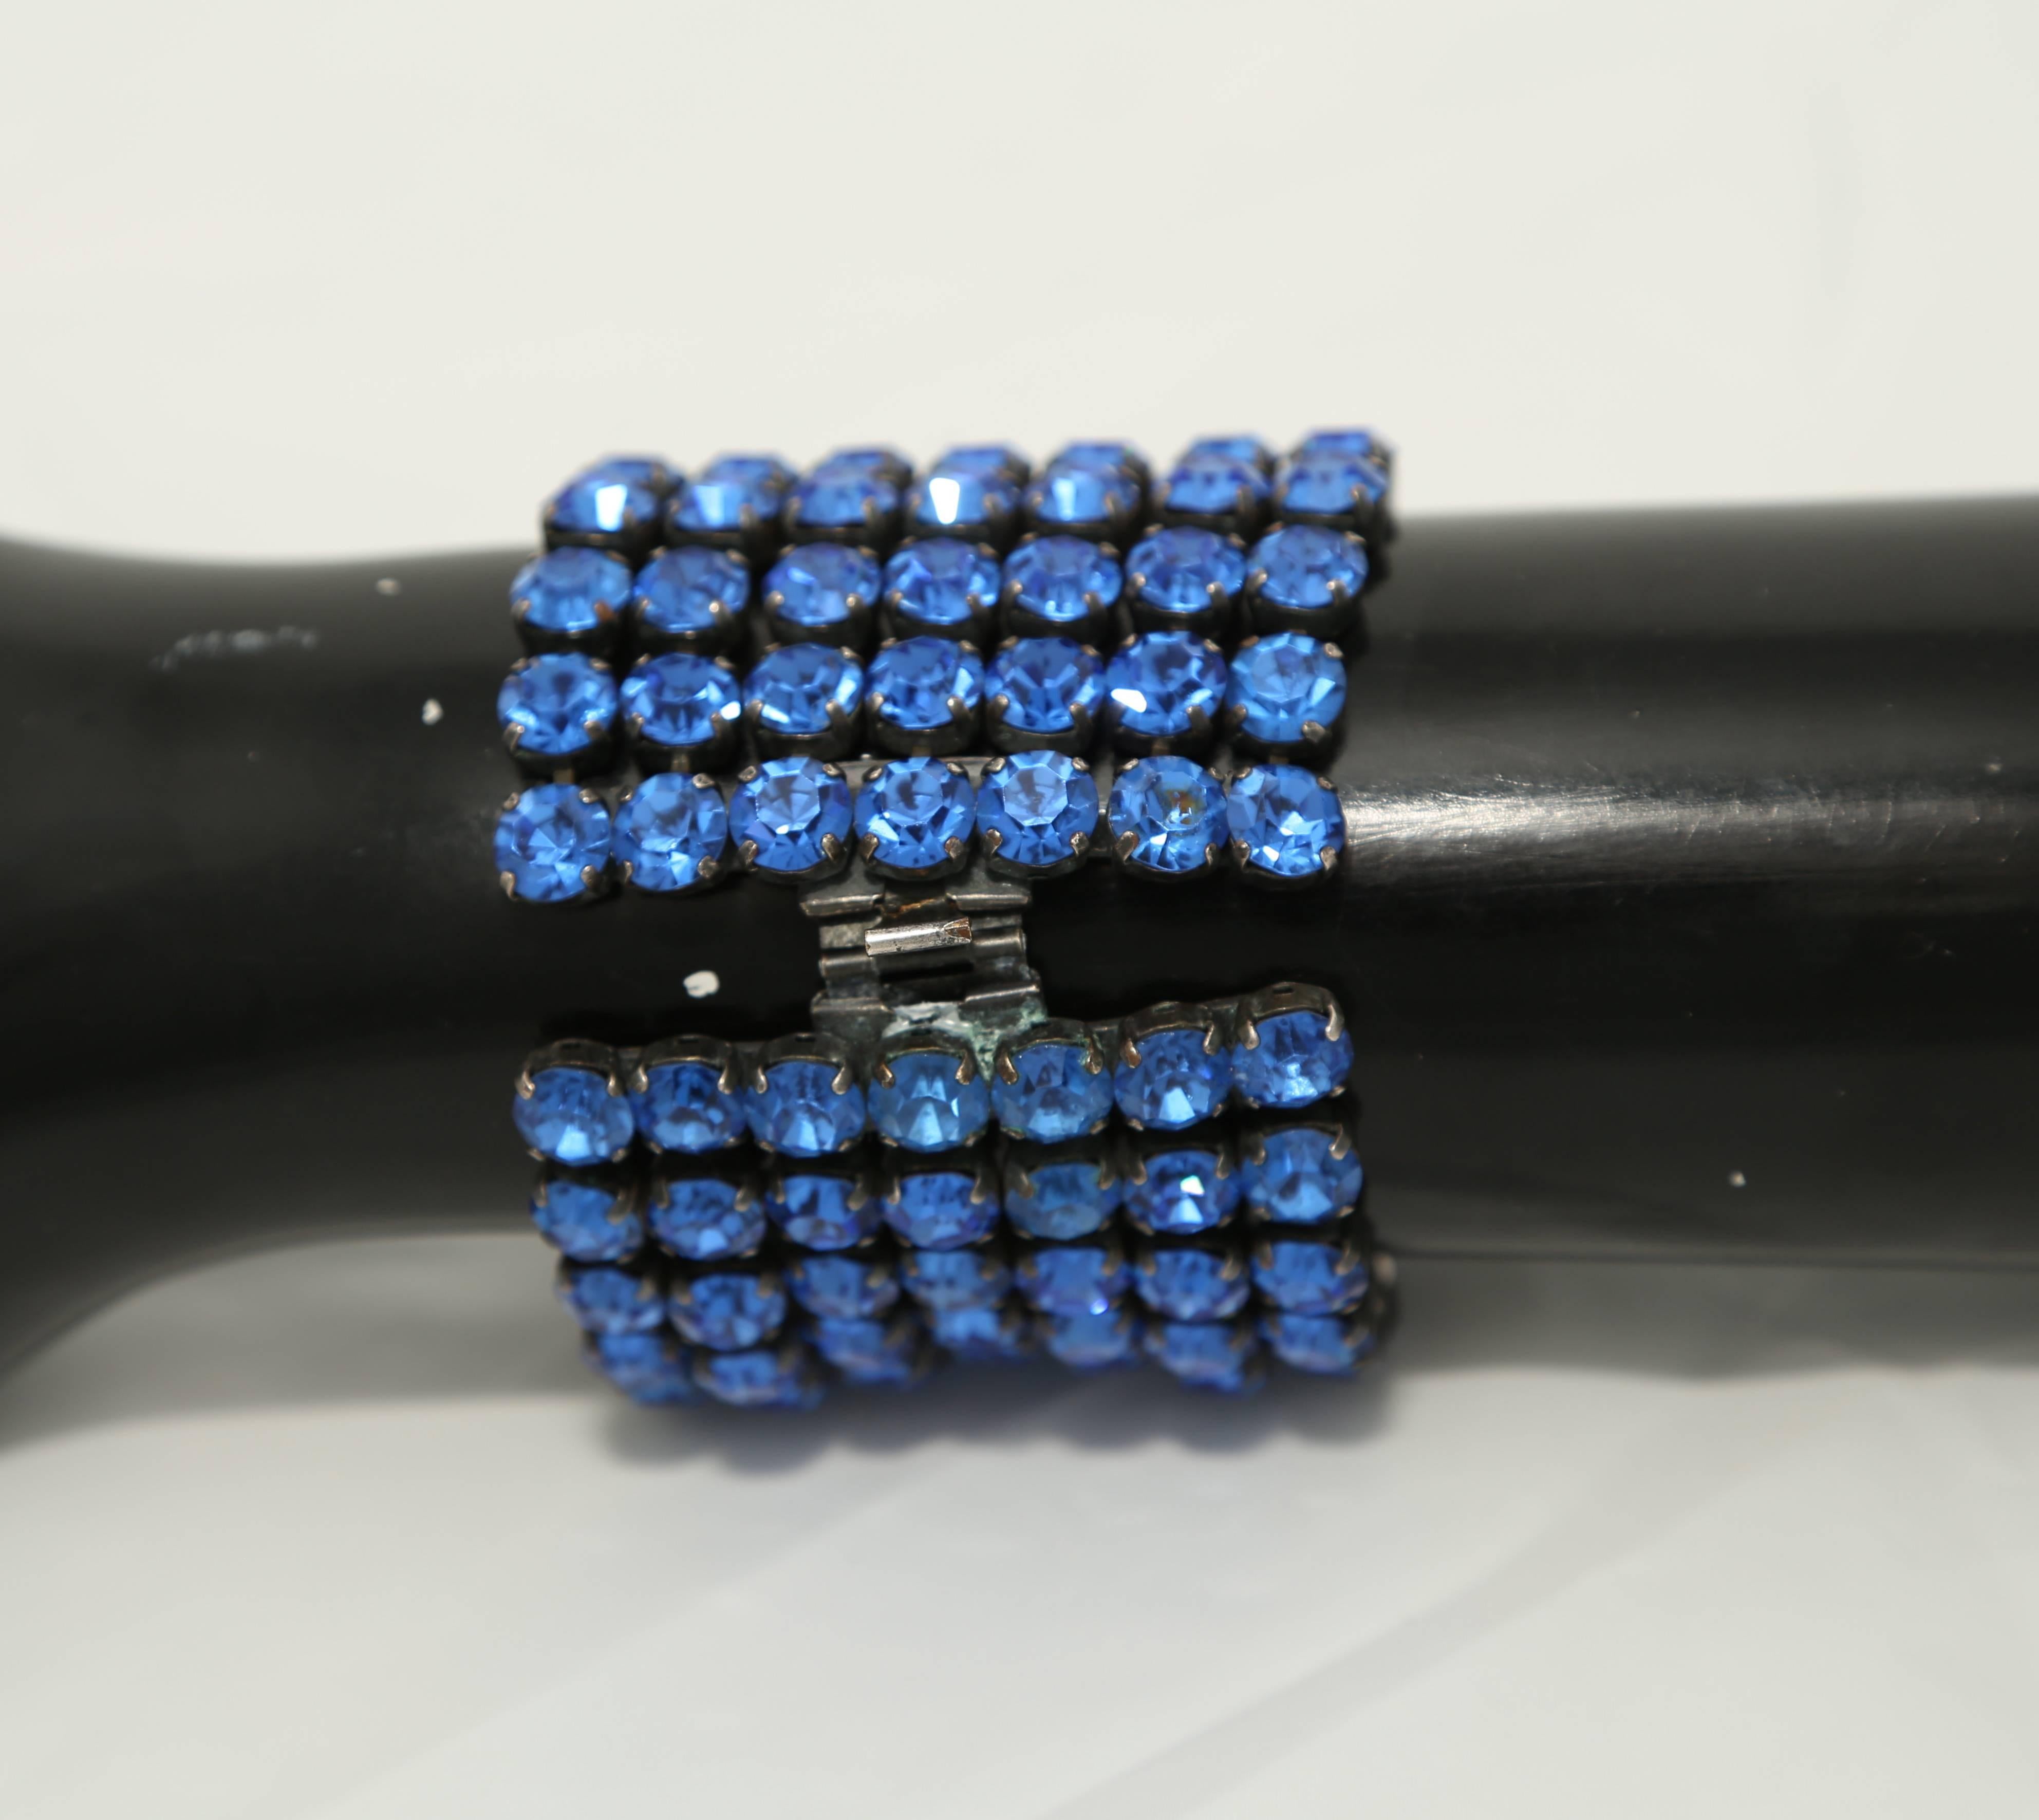 A vintage 1940s large vibrant blue rhinestone cuff bracelet 

Measures 

Length – 7 
Width - 2
